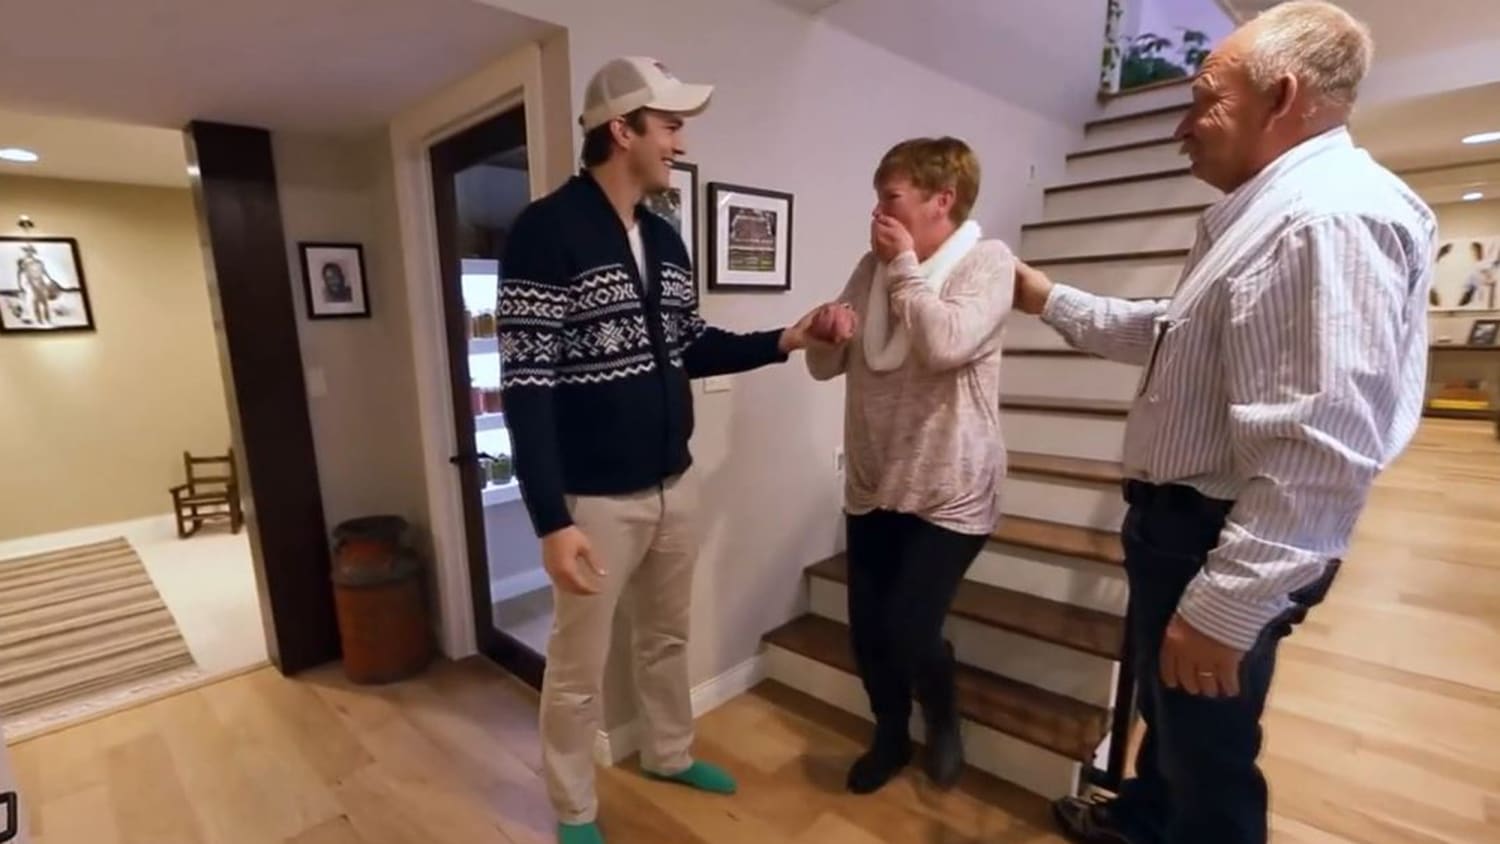 Ashton Kutcher surprises mom with a home makeover - TODAY.com